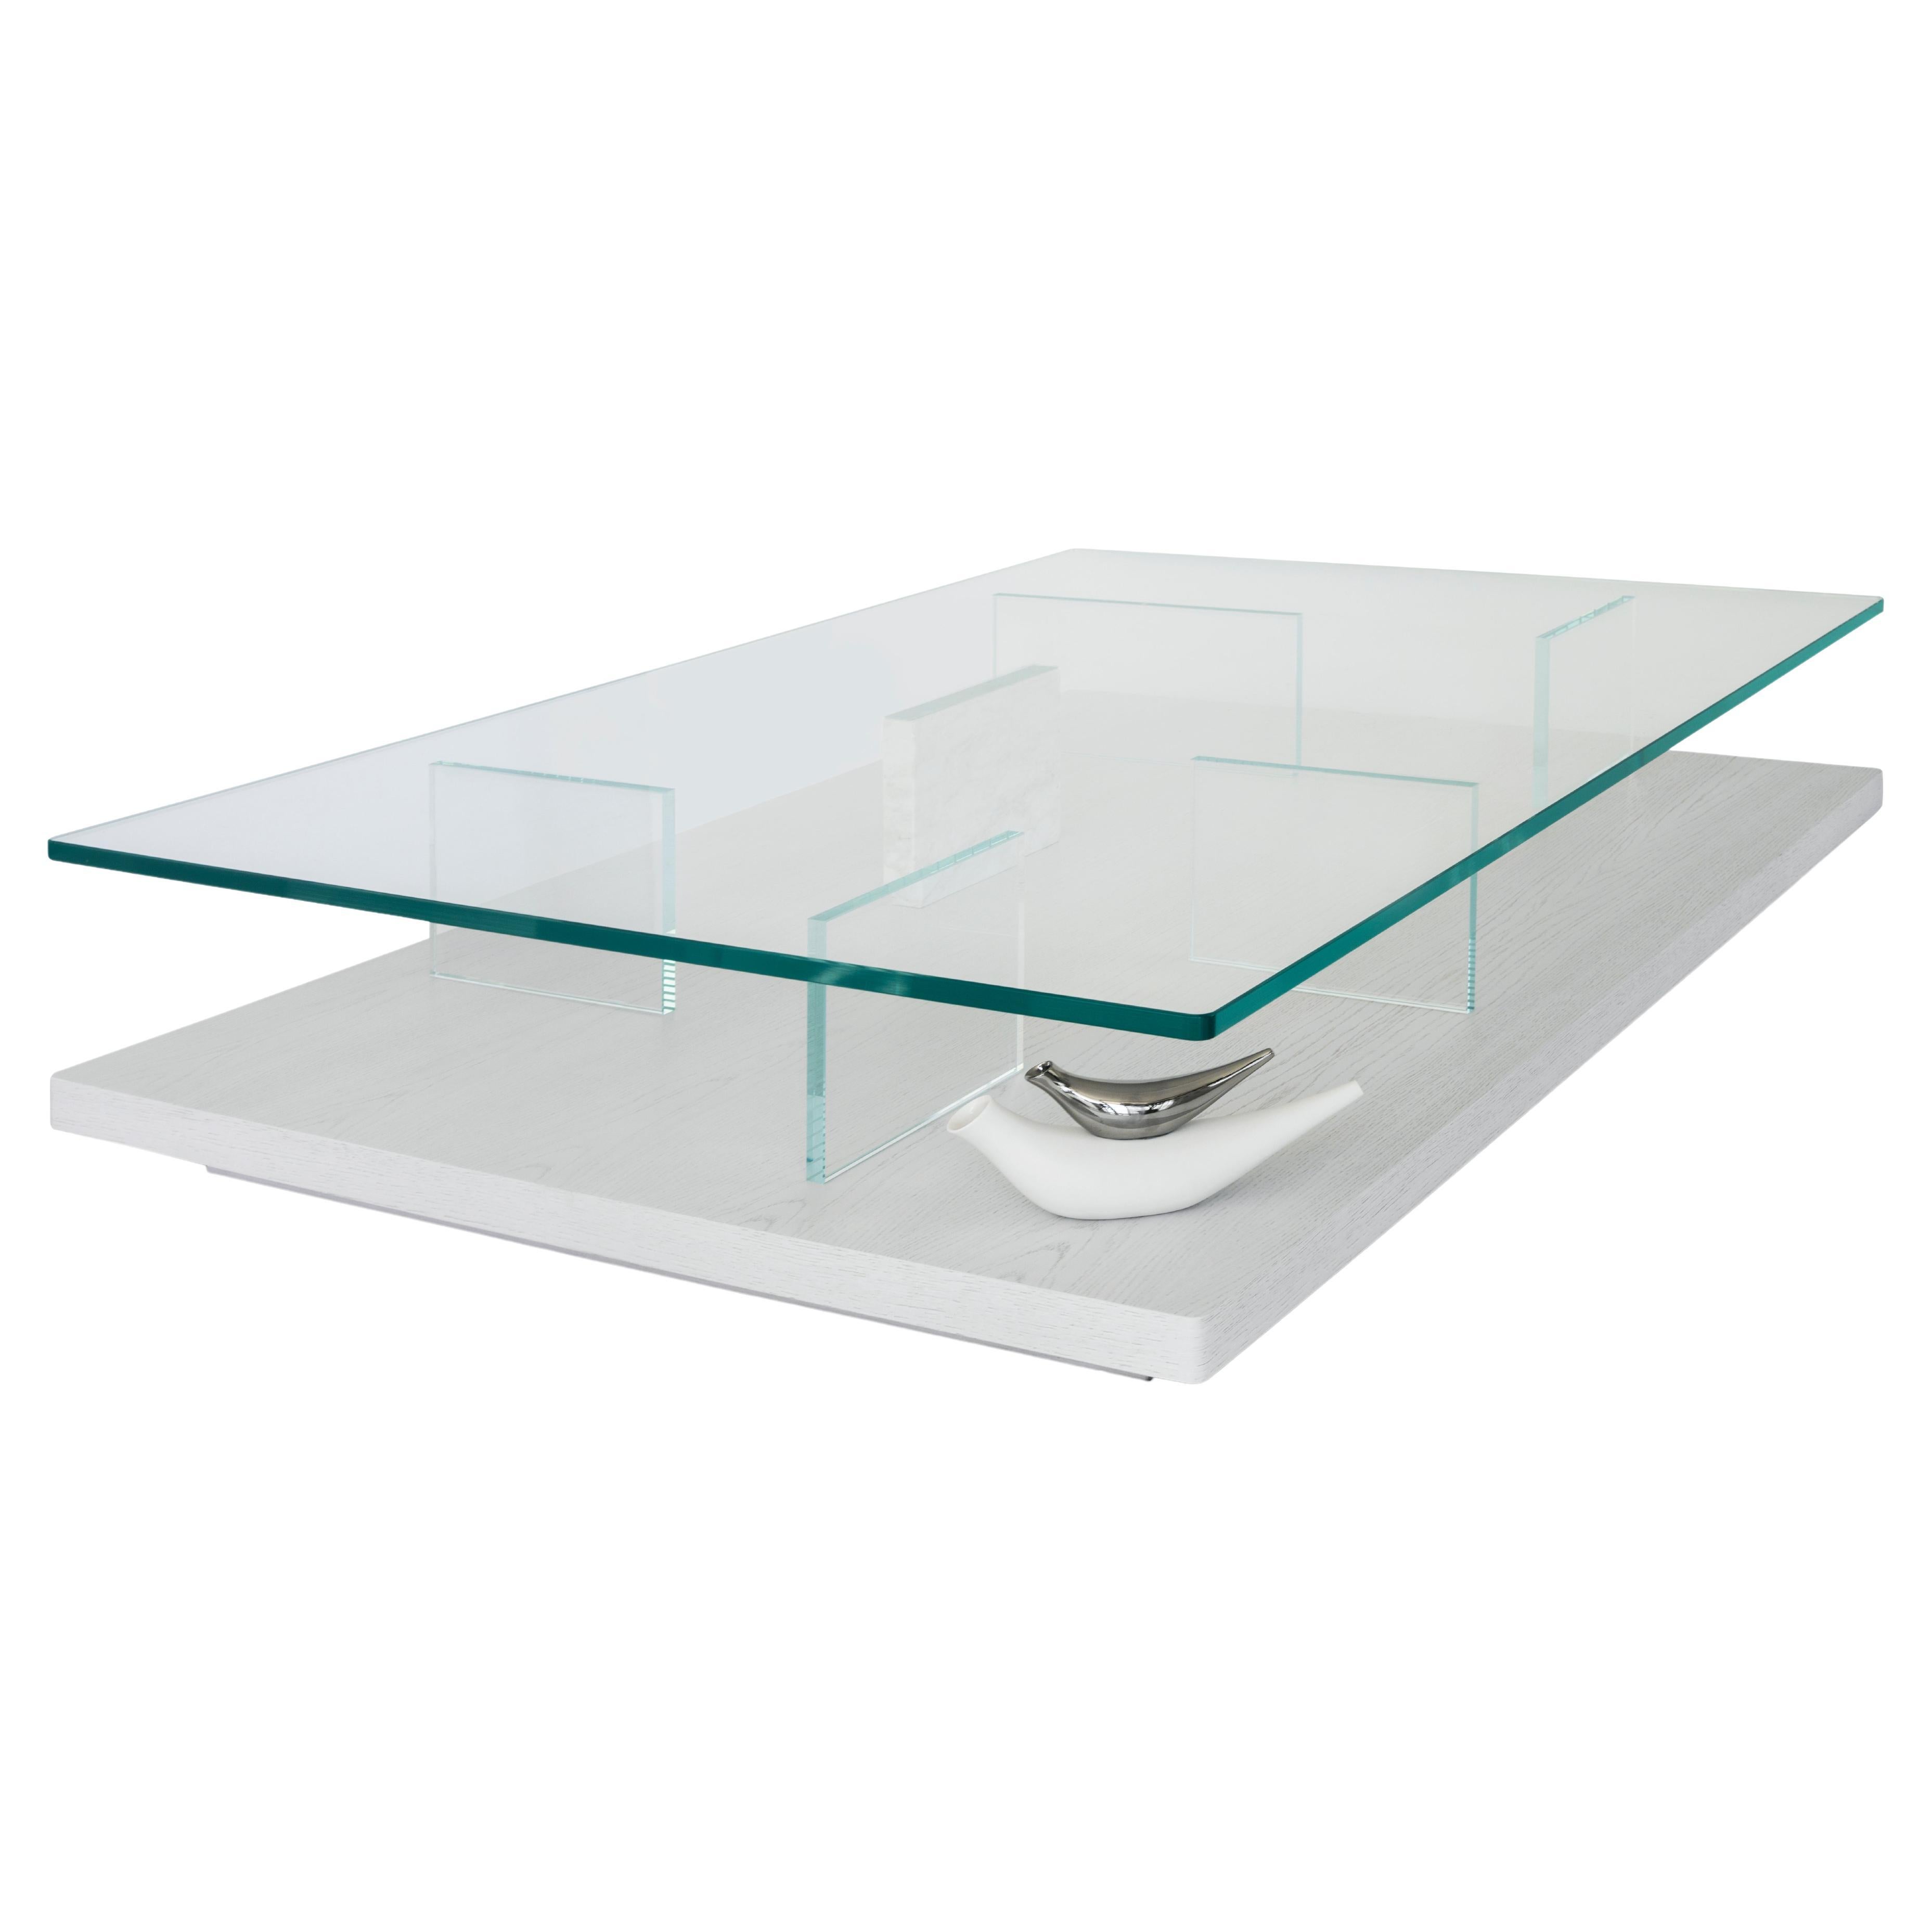 Table basse rectangulaire en verre moderne, table basse Puro